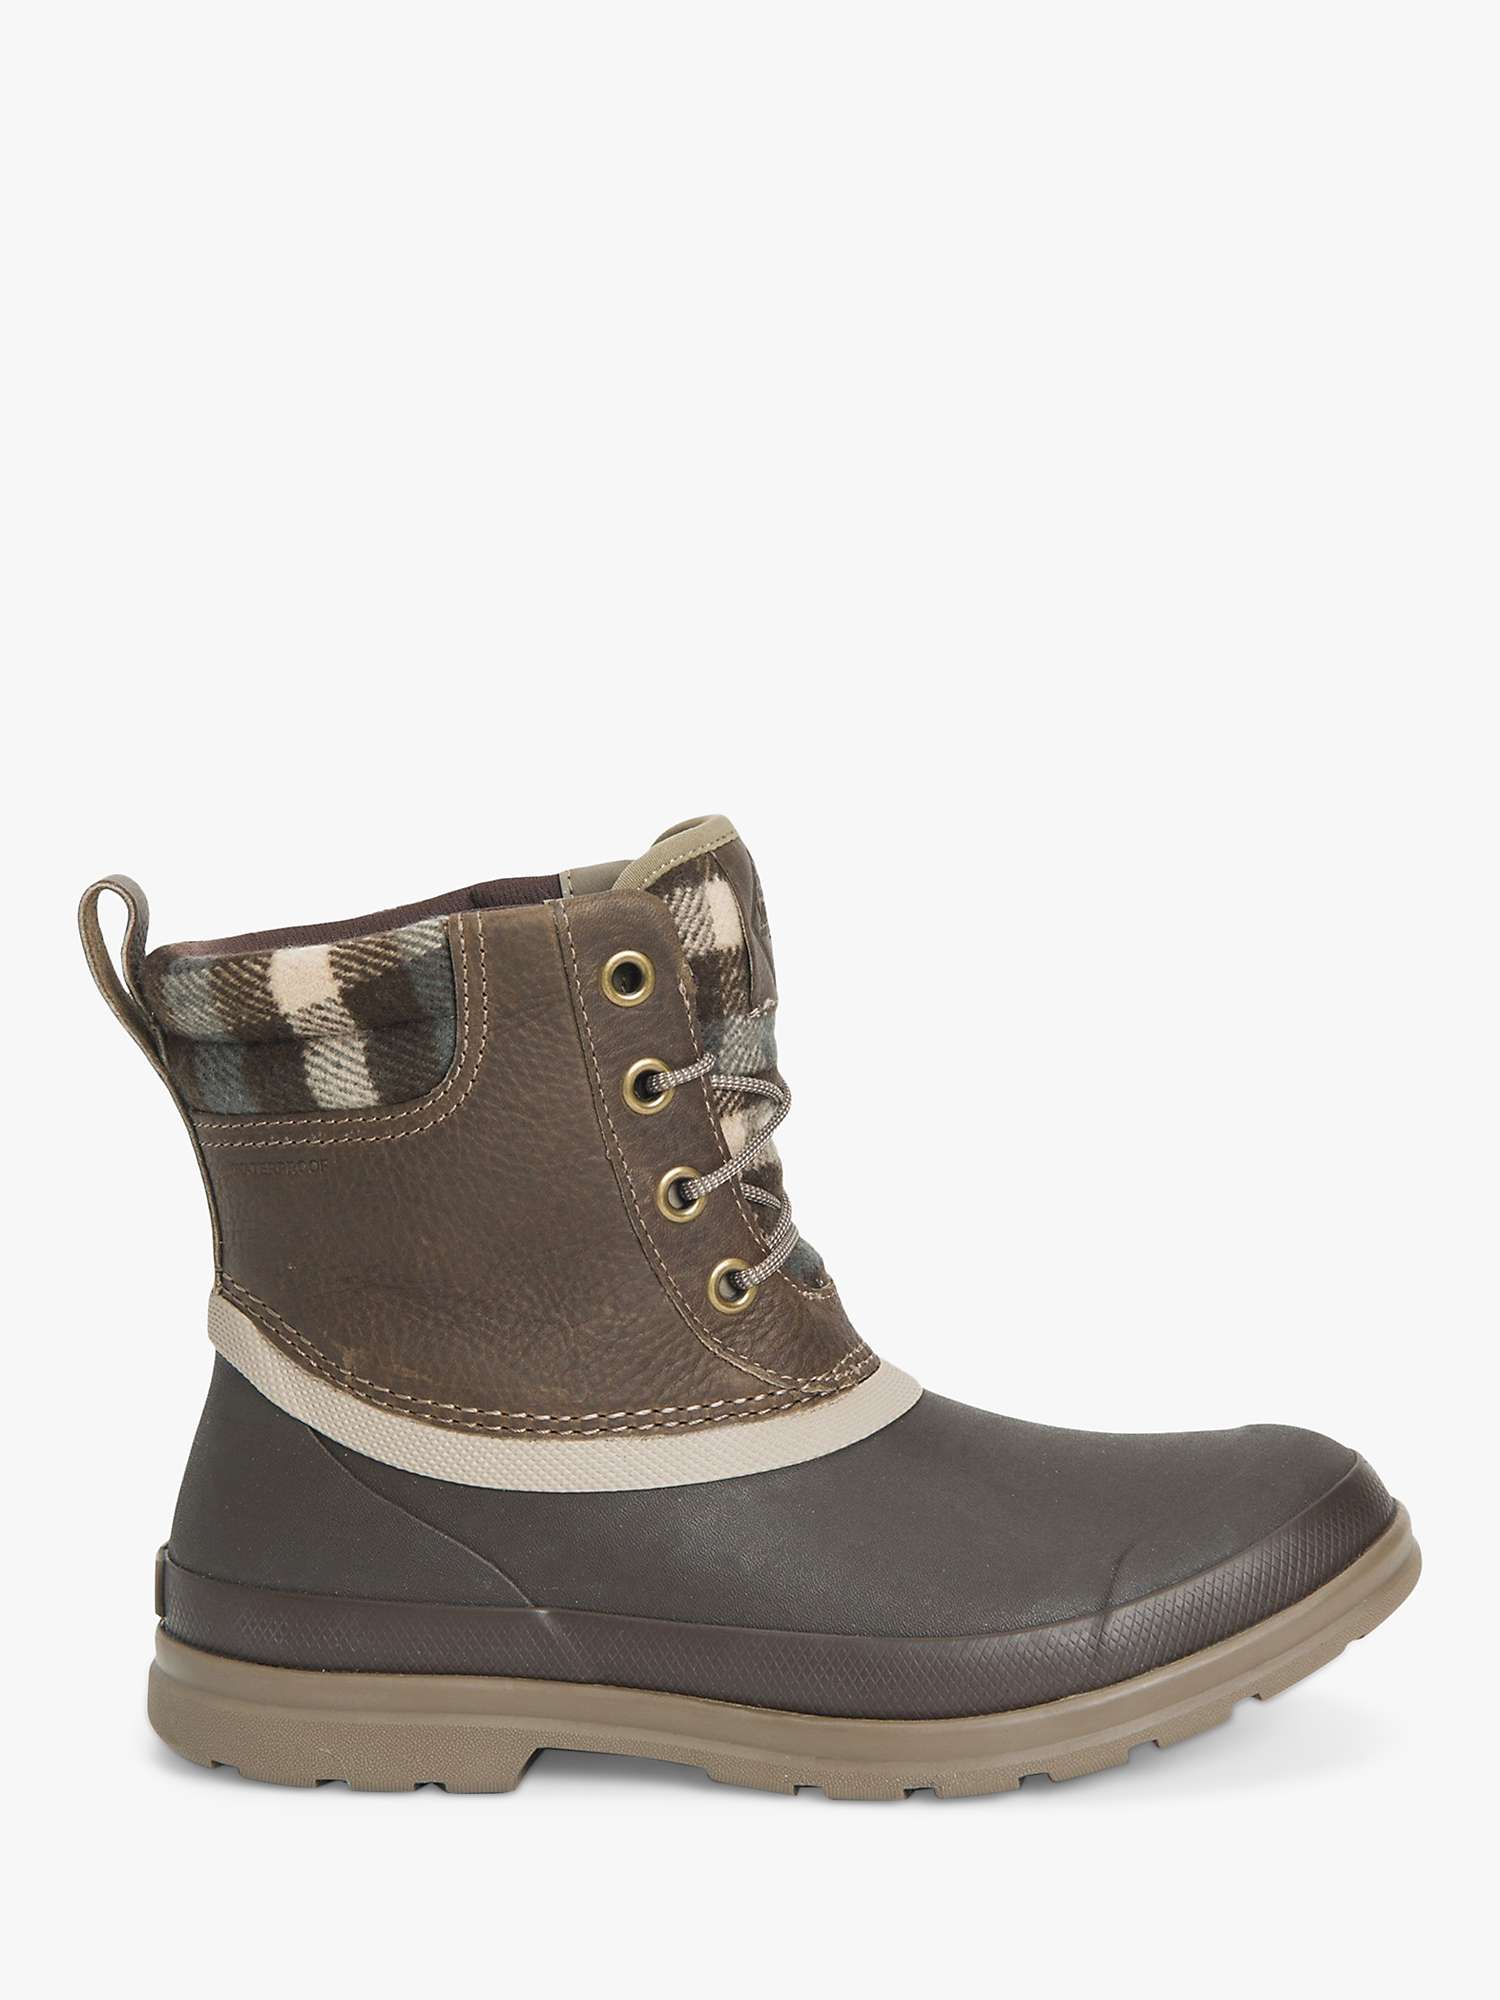 Buy Muck Originals Duck Lace Up Leather Short Wellington Boots, Walnut/Brown Online at johnlewis.com